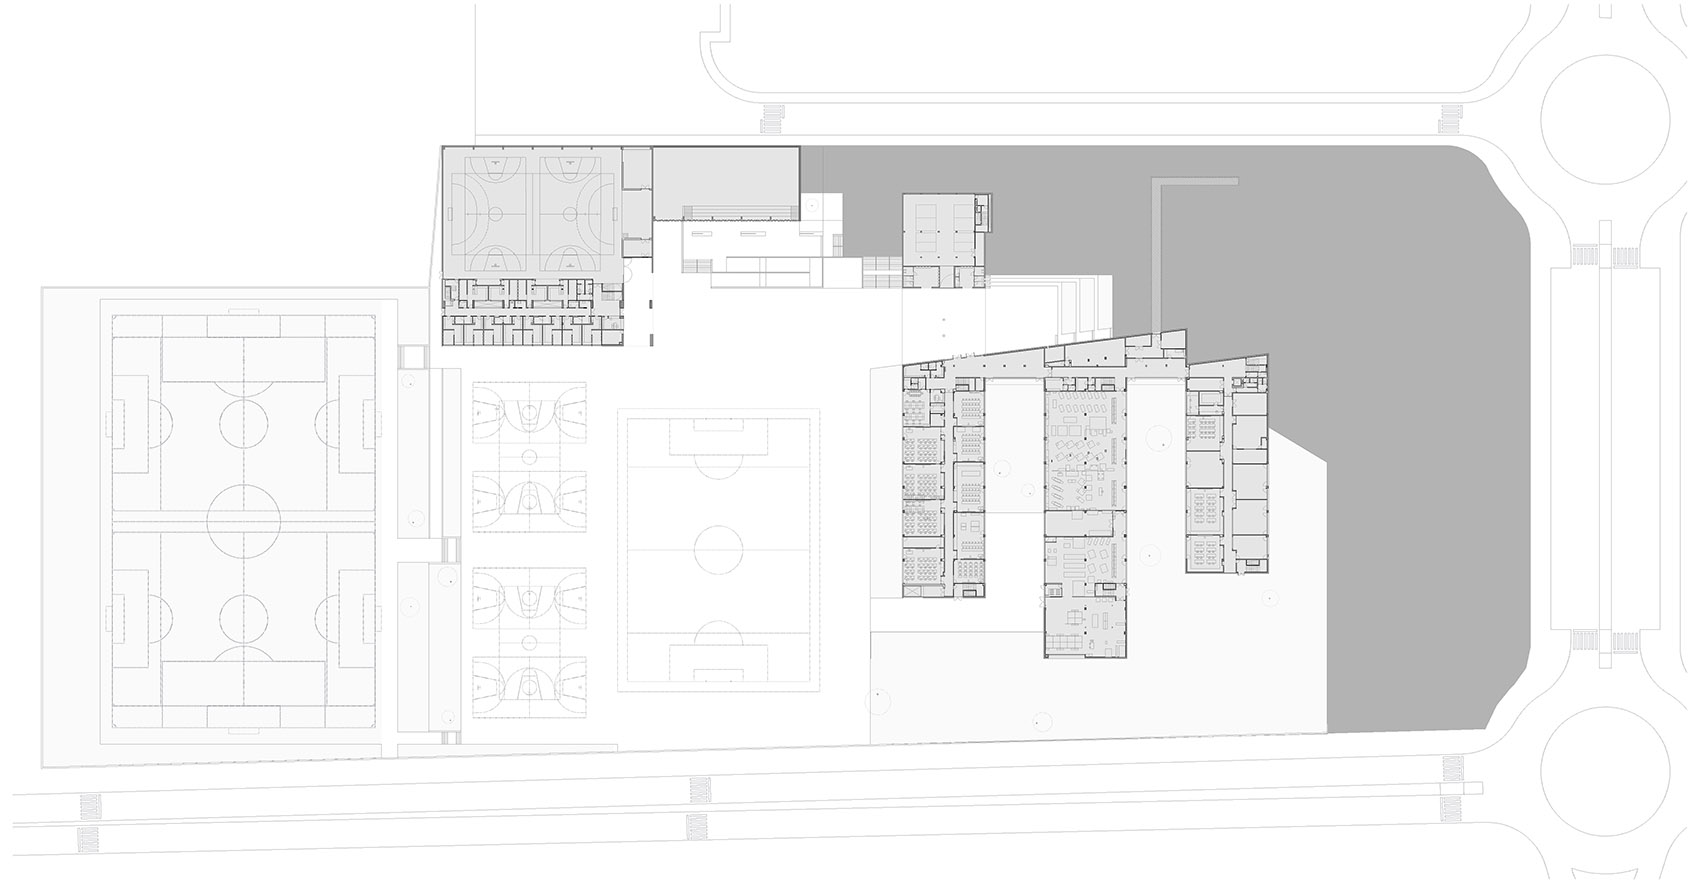 Salesianos Pamplona工艺学校，西班牙/体块与空地交错形成丰富空间体验-48